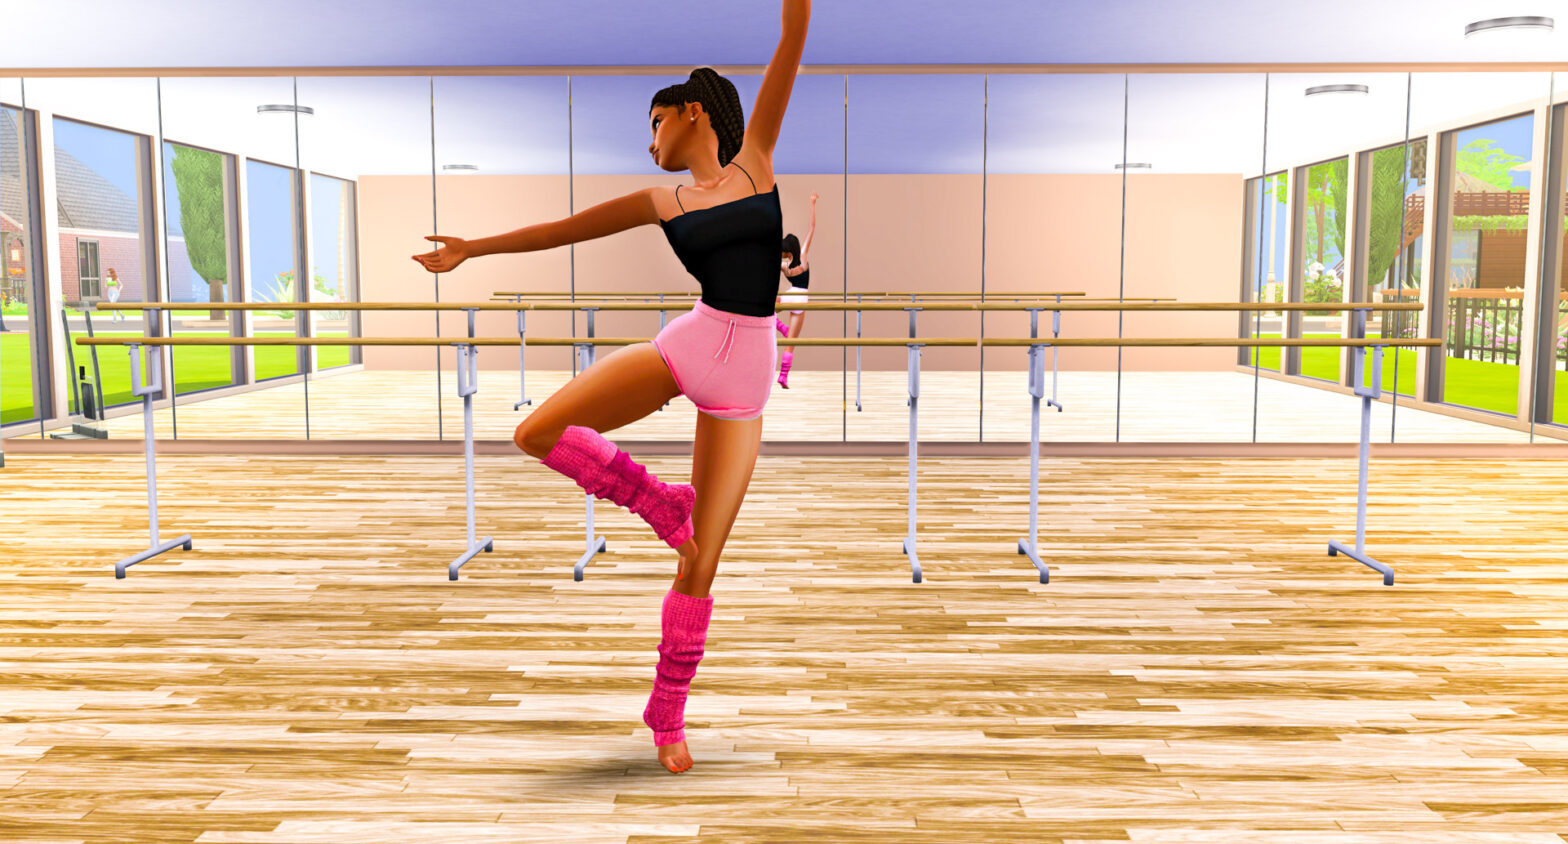 sims 4 dance mod animations